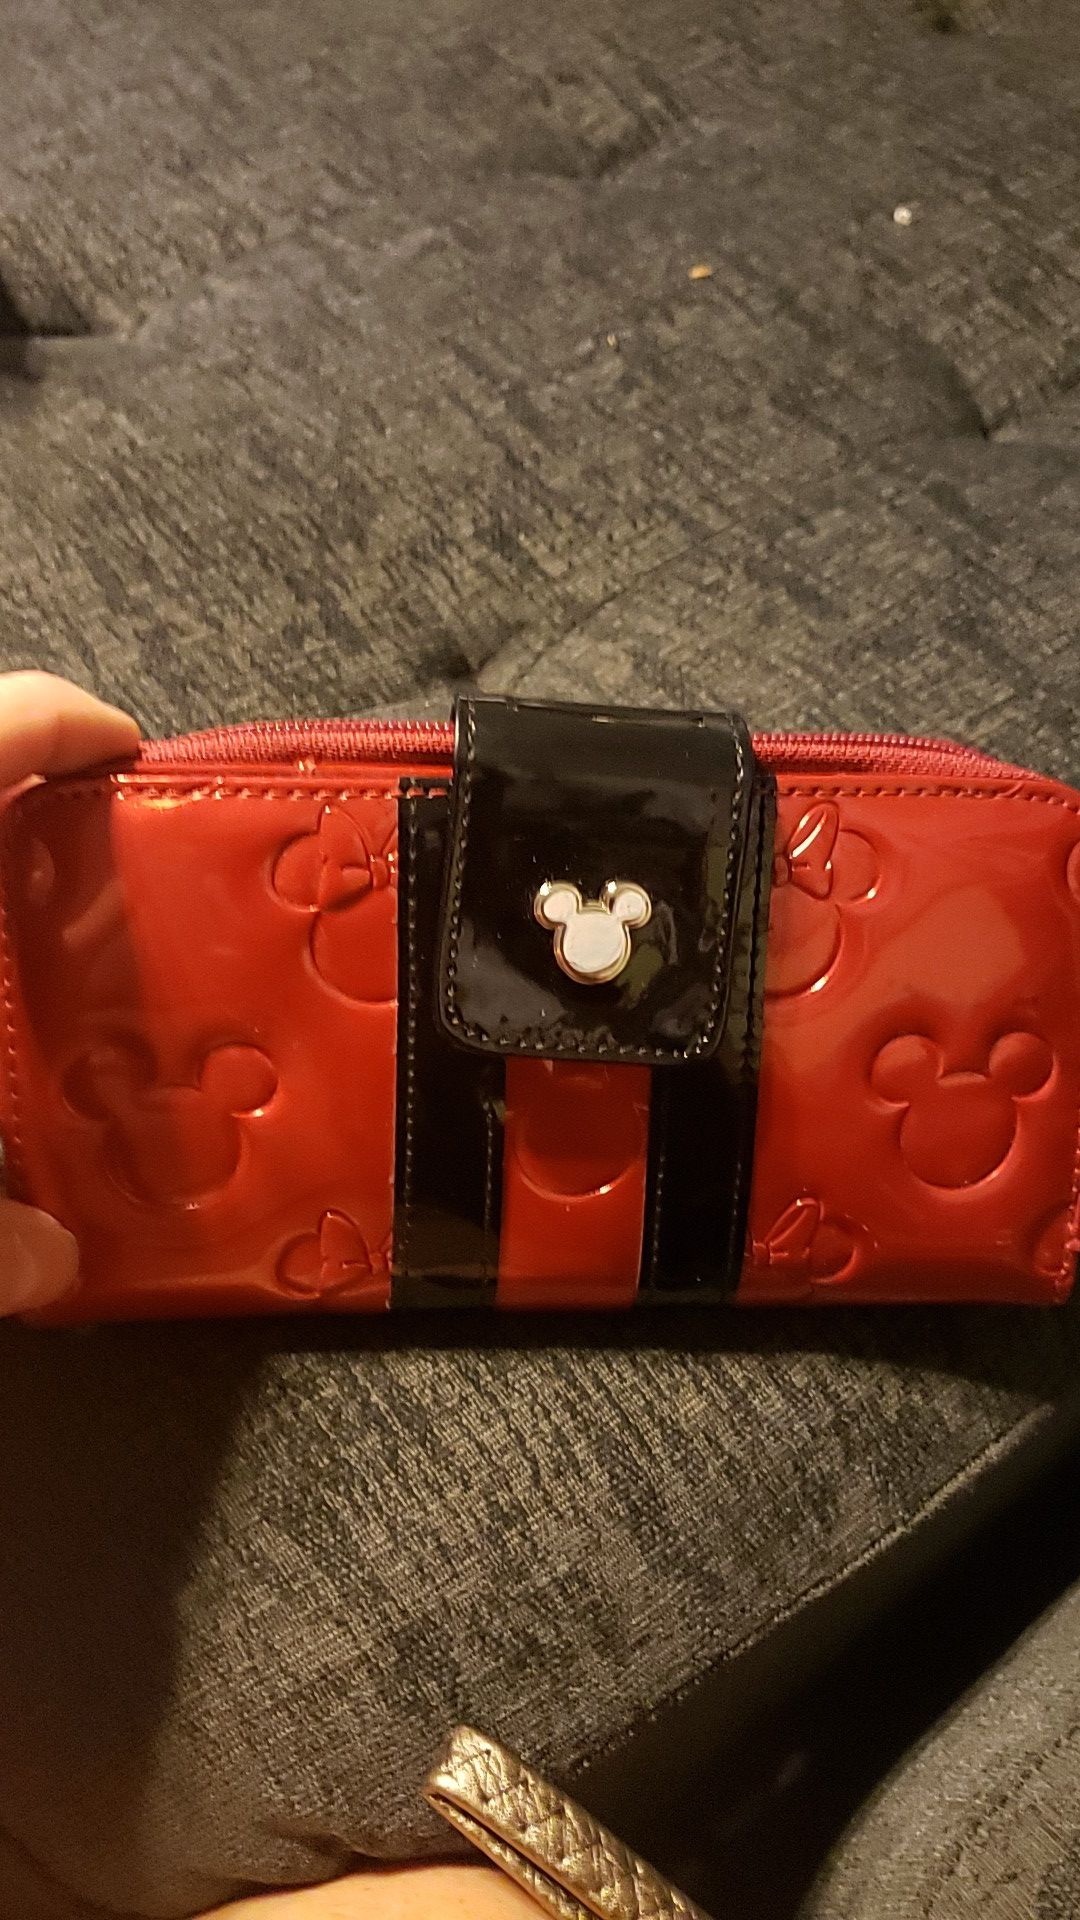 Mickeymouse wallet like new❤❤❤